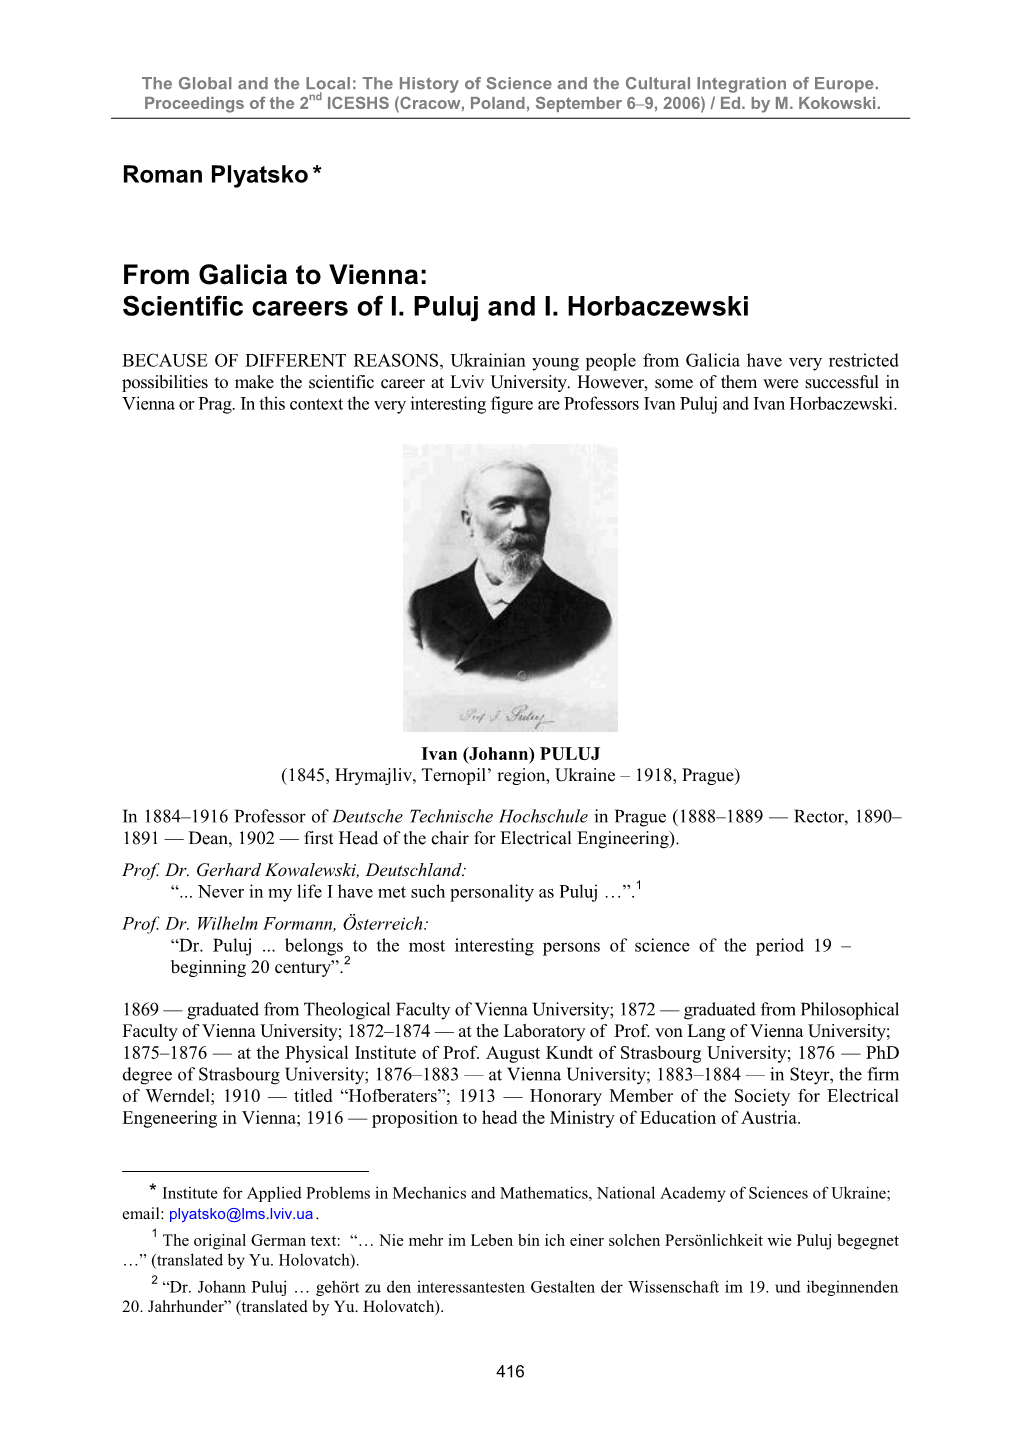 From Galicia to Vienna: Scientific Careers of I. Puluj and I. Horbaczewski